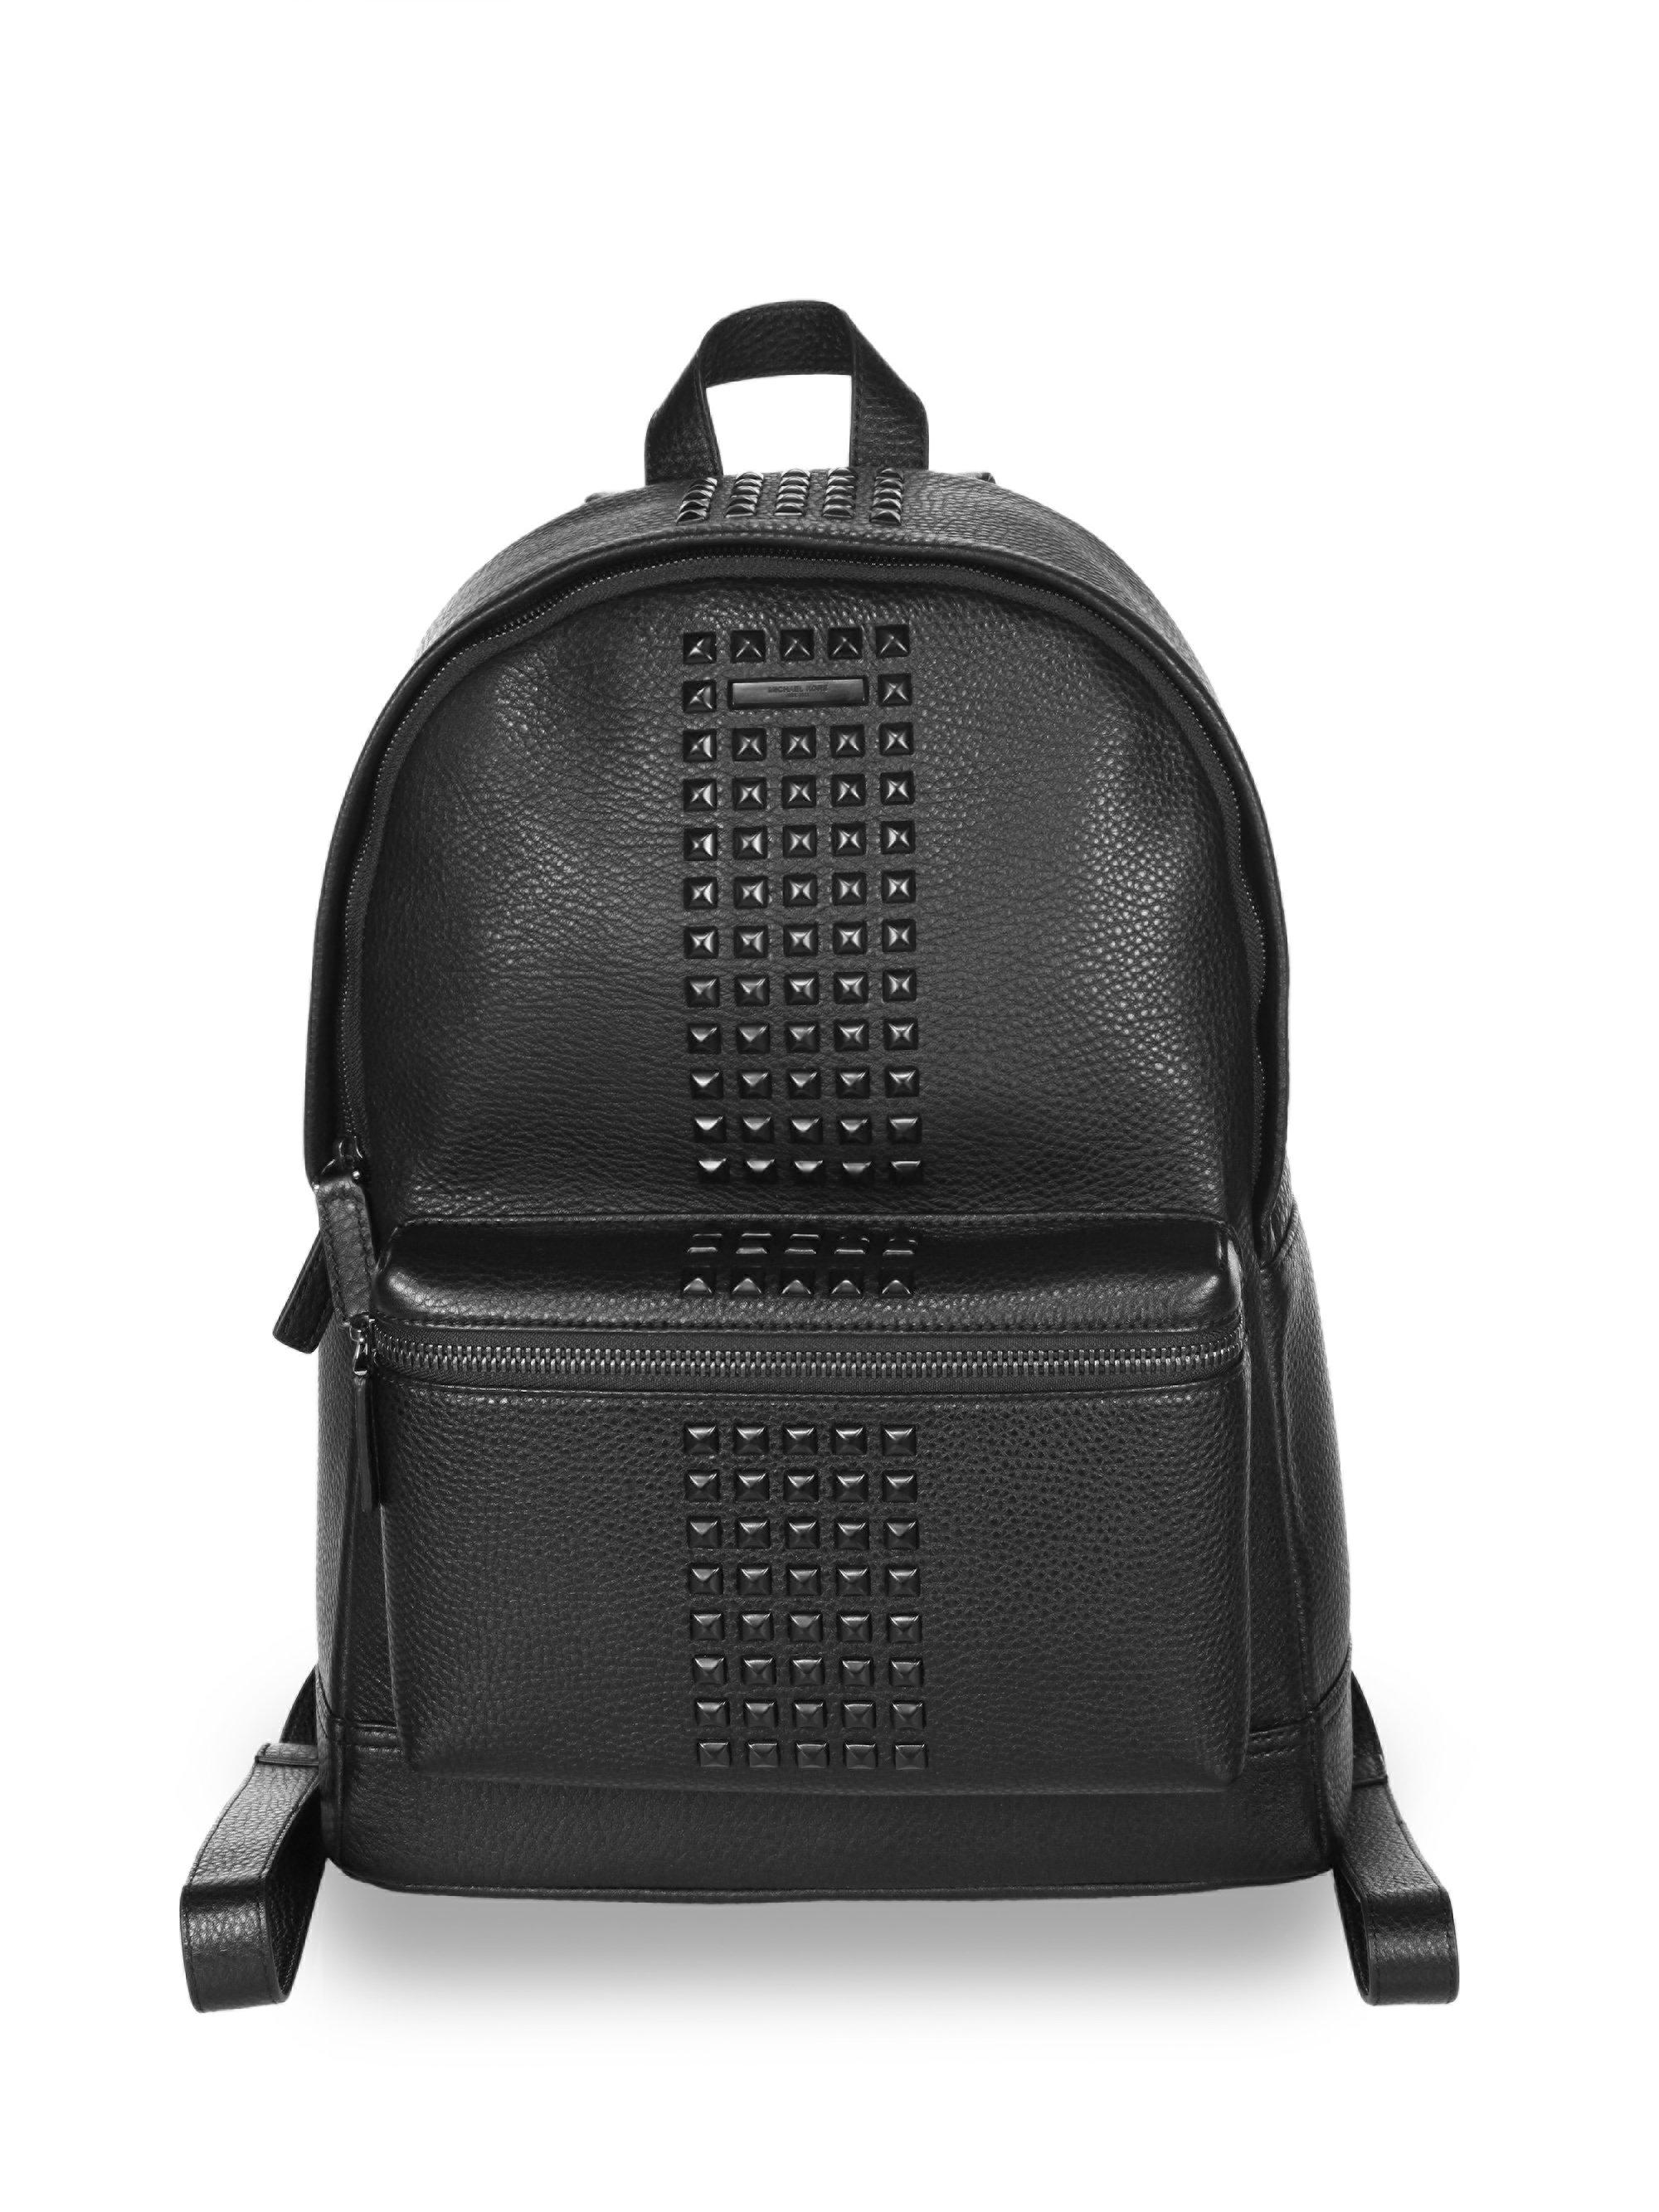 Michael Kors Leather Bryant Backpack Black for Men - Lyst